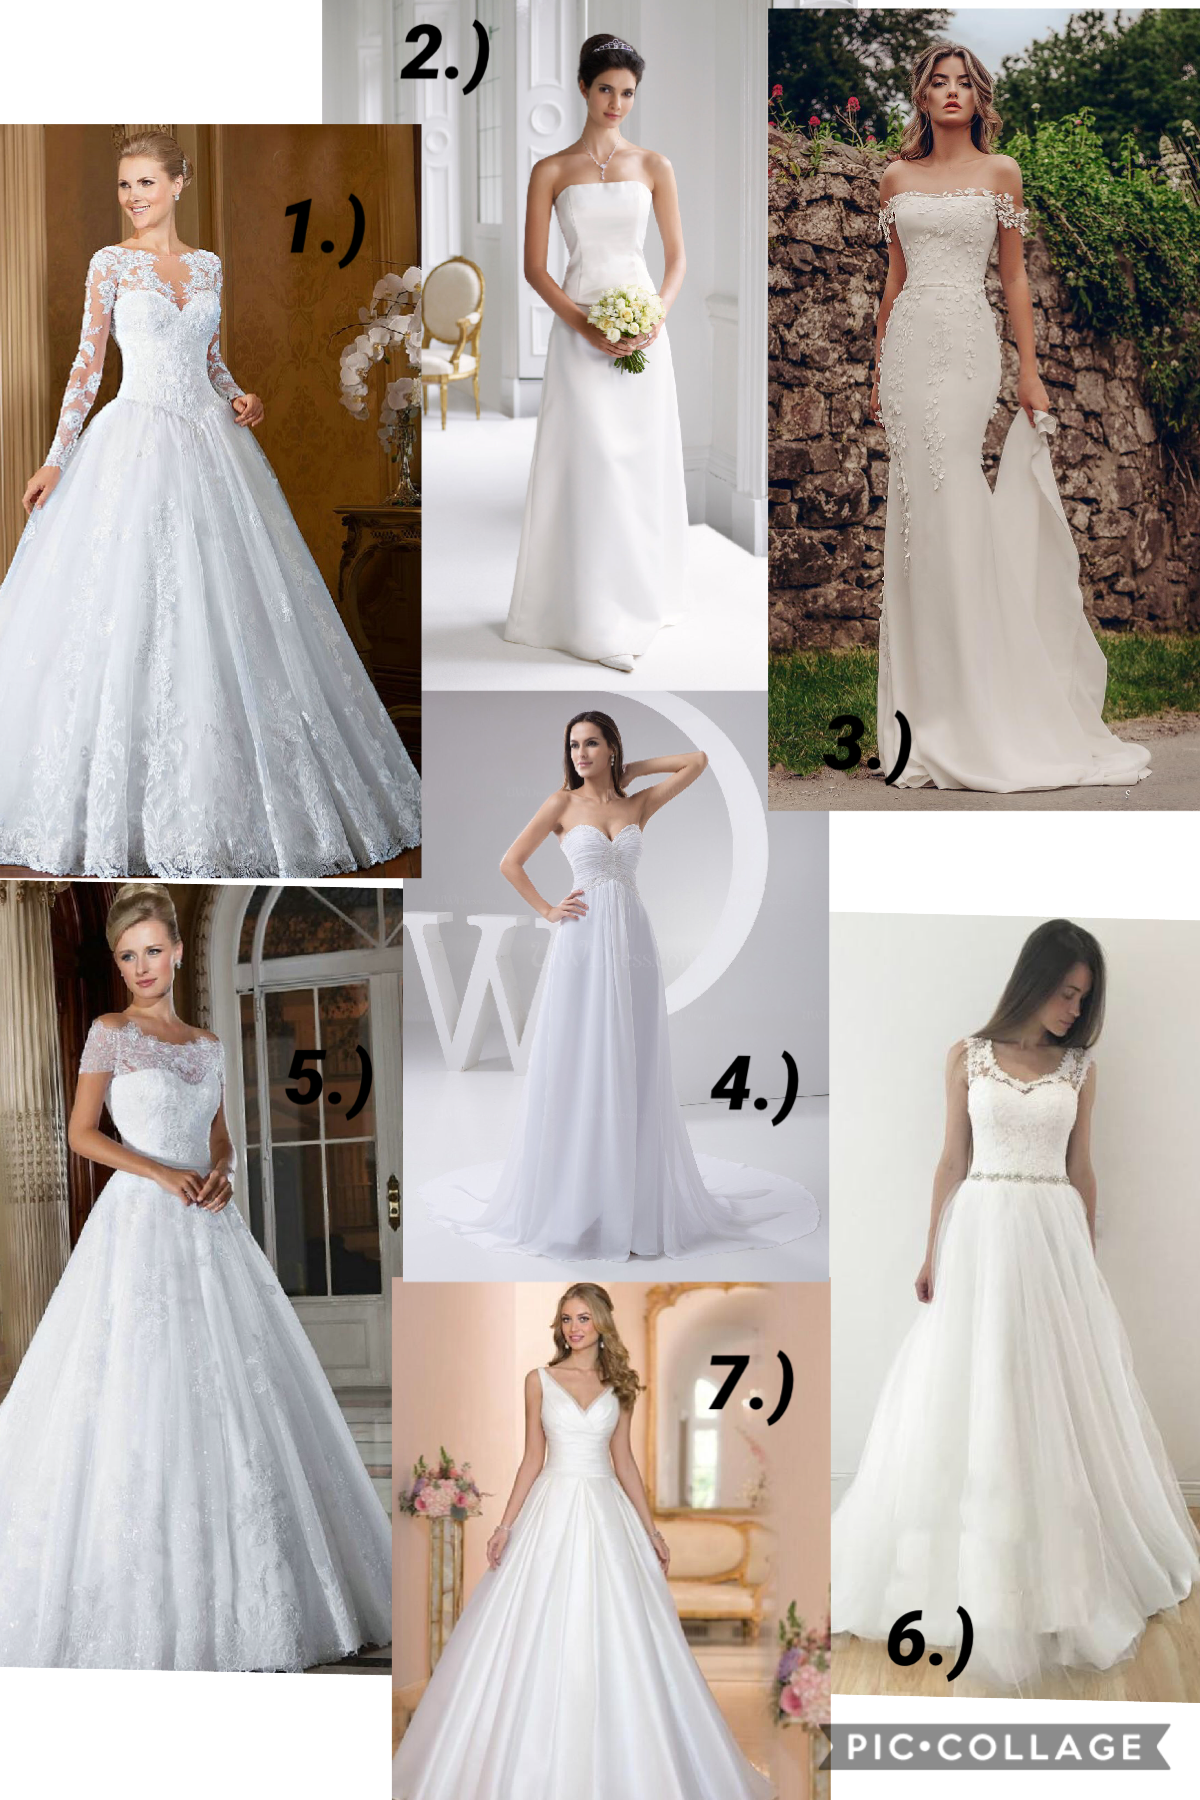 Choose ur wedding dress